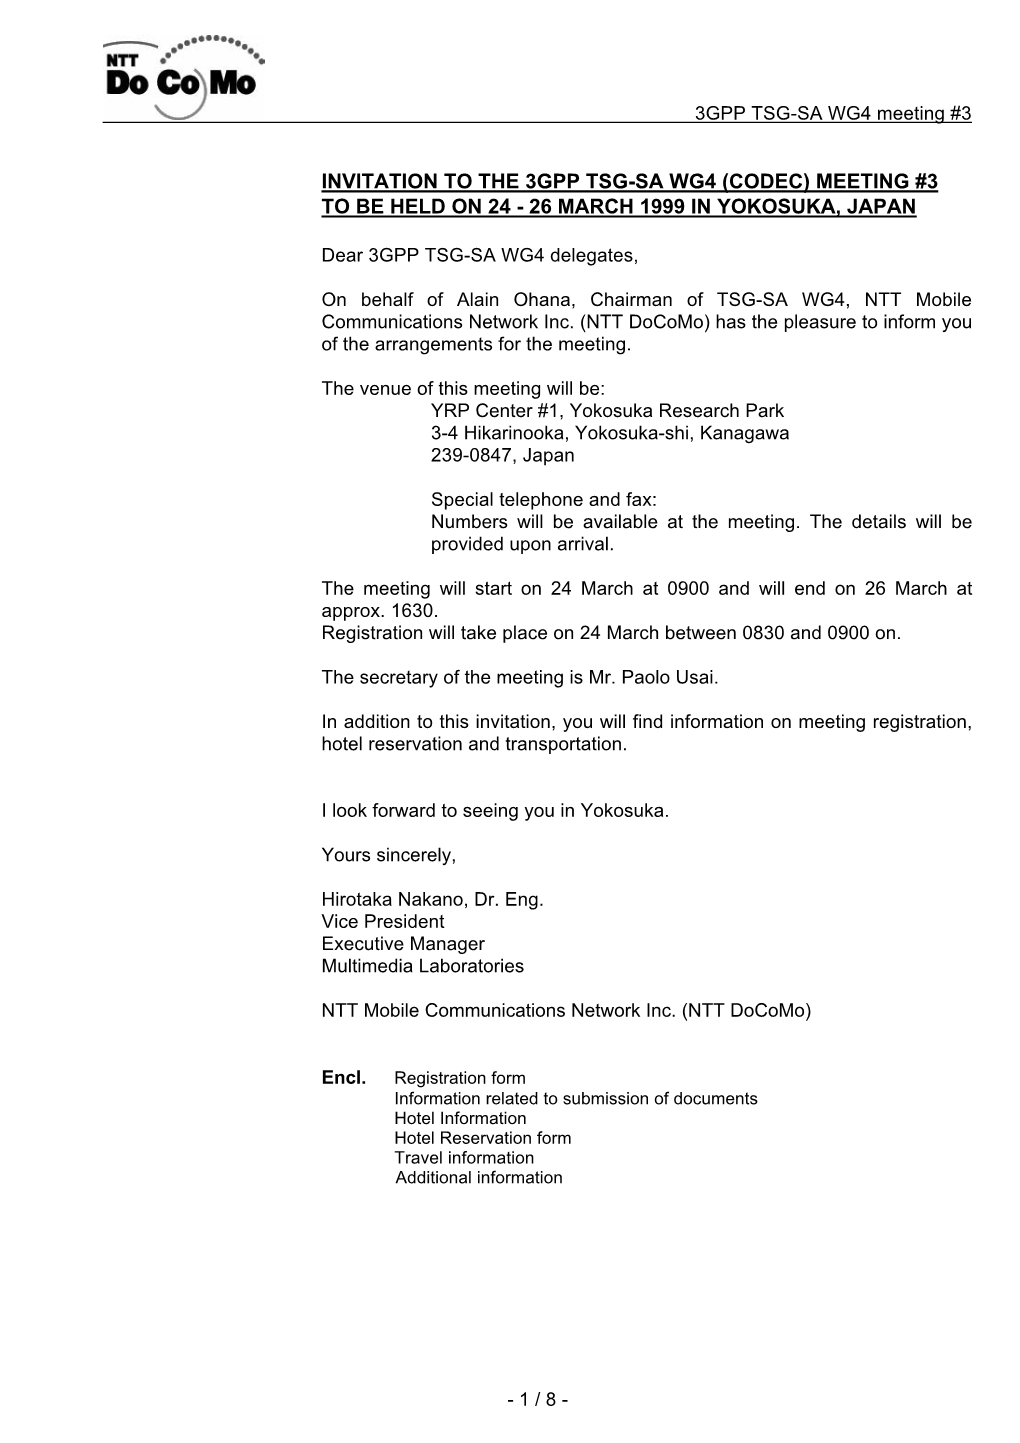 Invitation to the 3Gpp Tsg-Sa Wg4 (Codec) Meeting #3 to Be Held on 24 - 26 March 1999 in Yokosuka, Japan